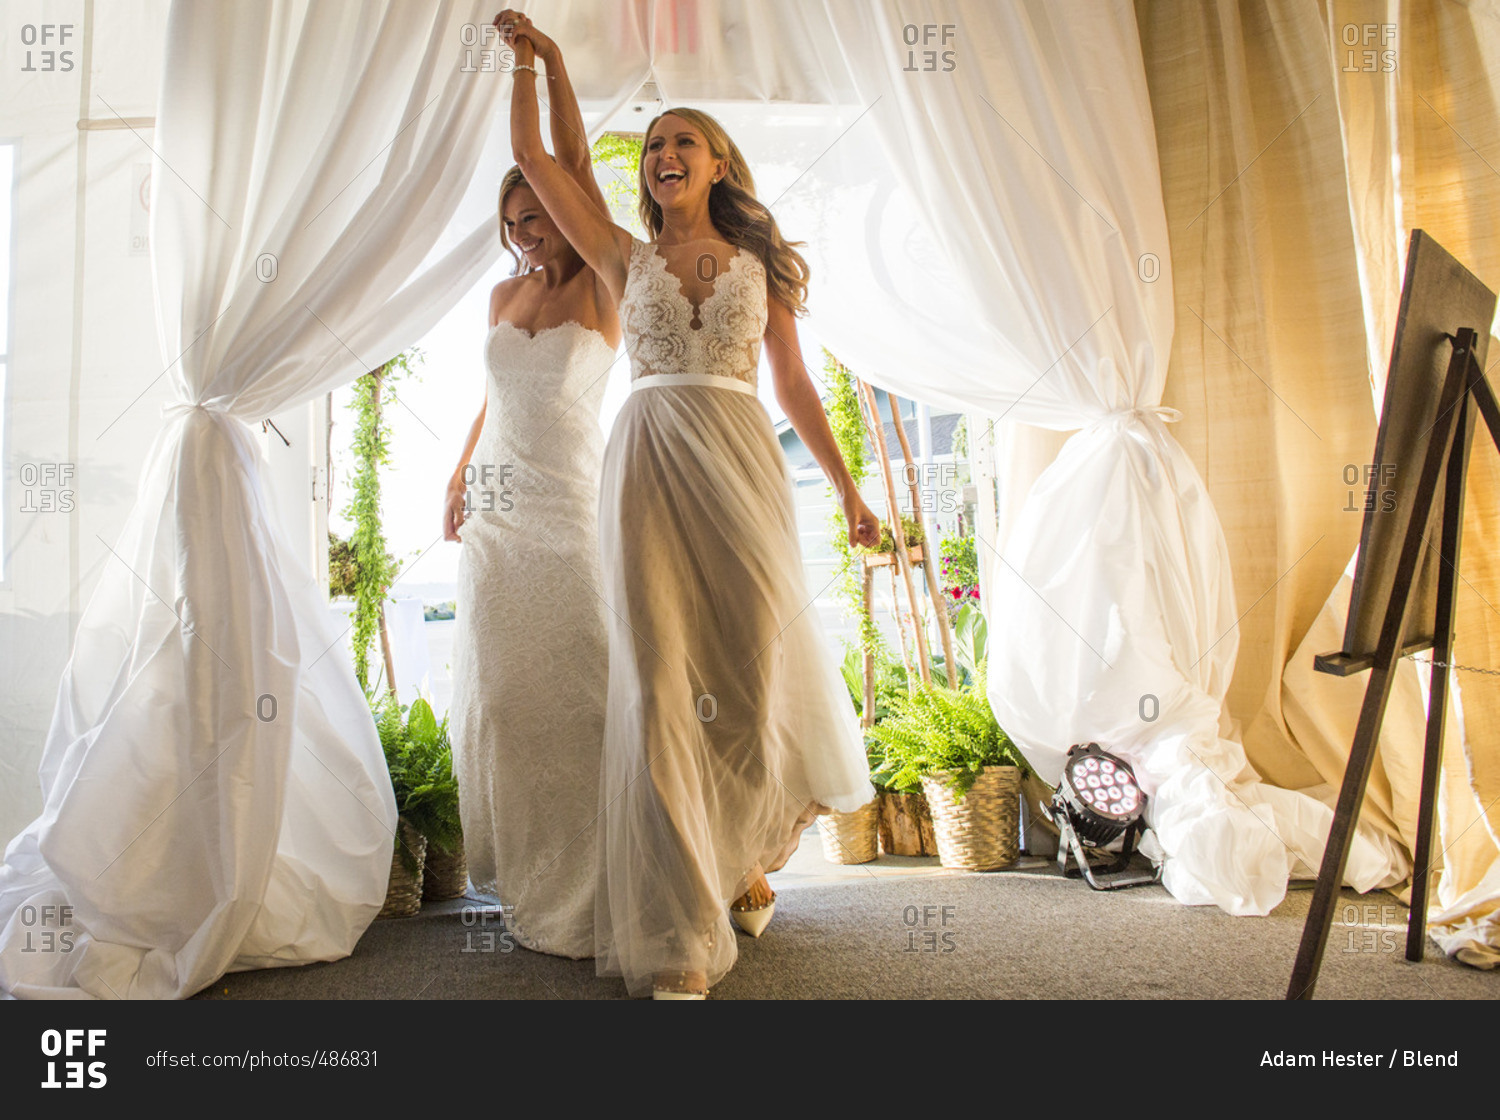 Caucasian brides walking through curtain